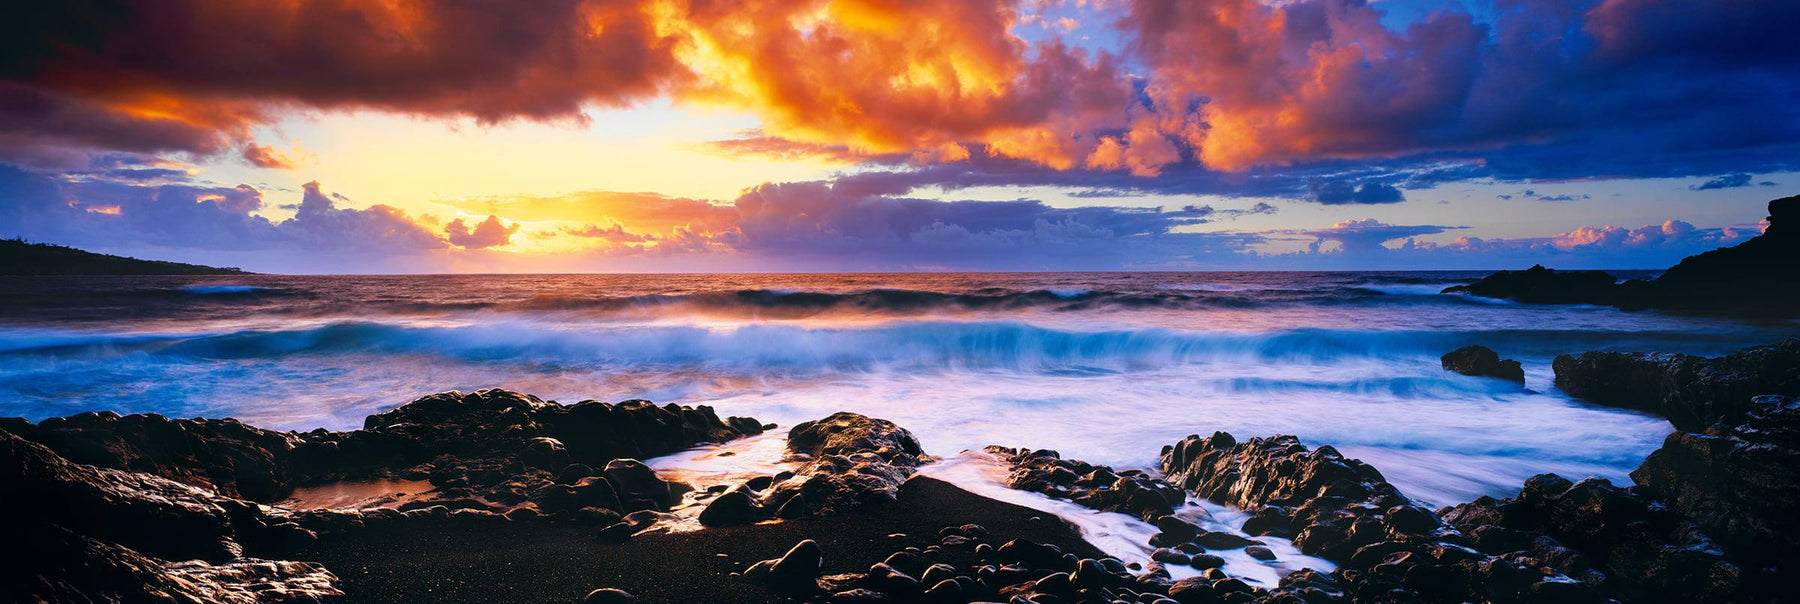 Waves crashing onto a rocky beach in Hana Hawaii with the sun rising into a cloud filled sky